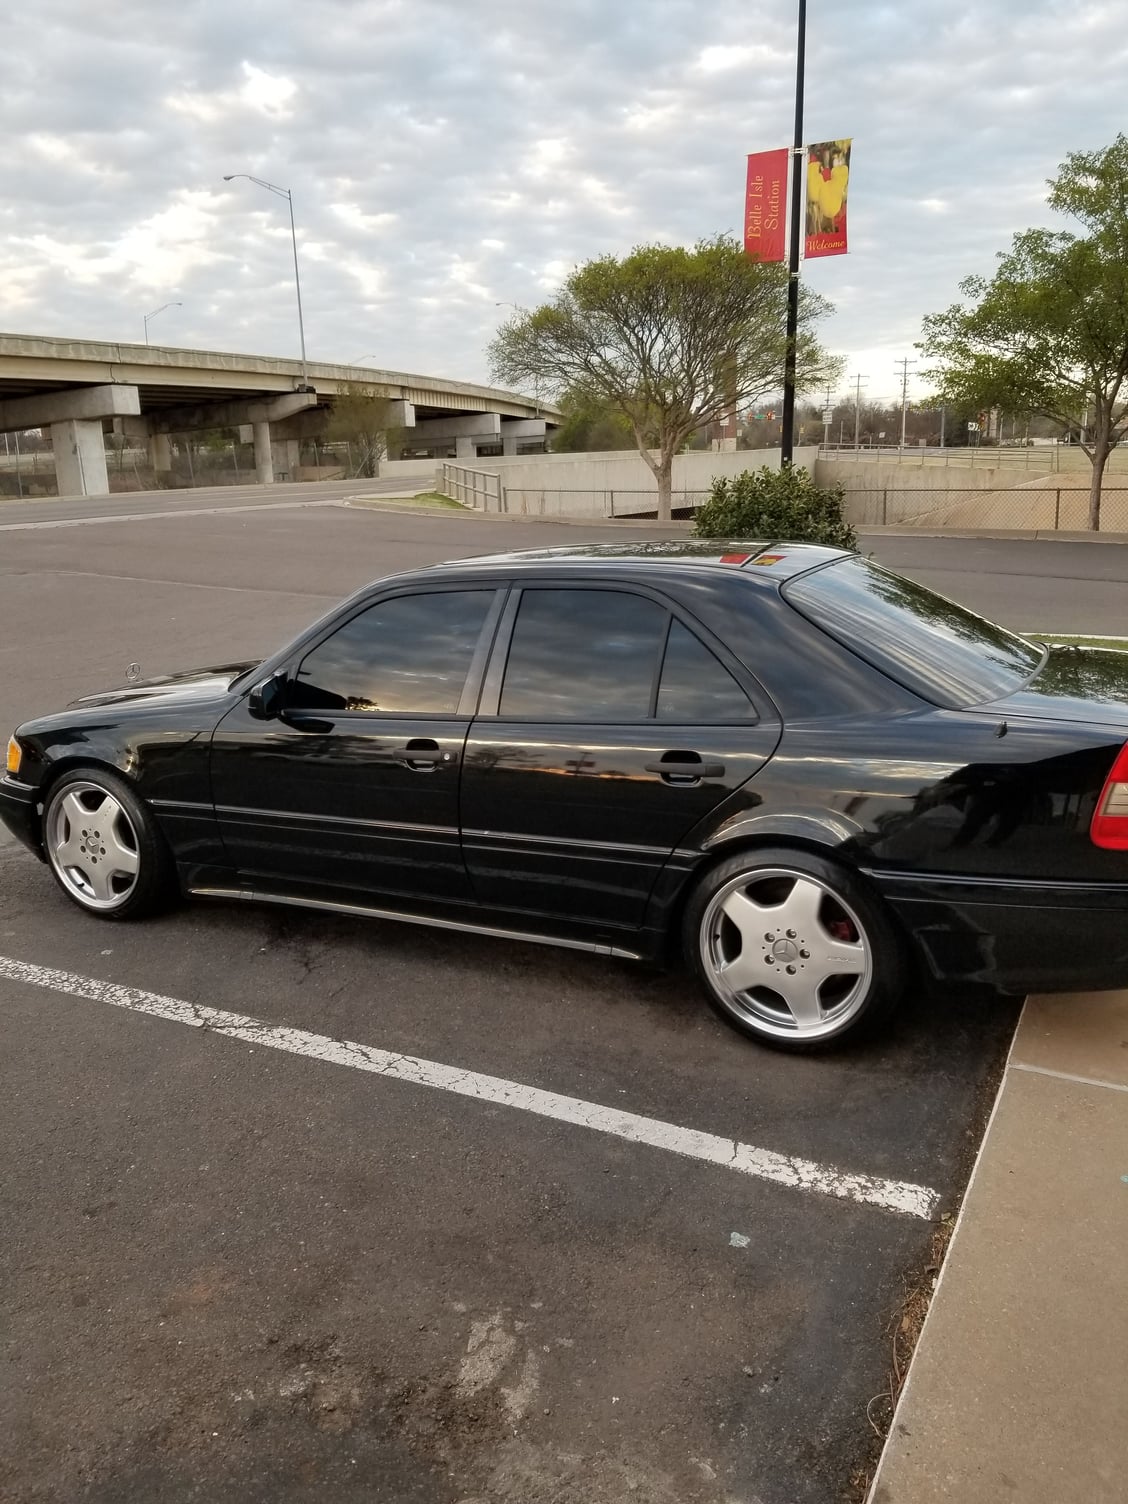 1996 Mercedes-Benz C36 AMG - 1996 C36 AMG - Used - VIN WDBHM36E4TF381332 - 140,000 Miles - 6 cyl - 2WD - Automatic - Sedan - Black - Oklahoma City, OK 73170, United States